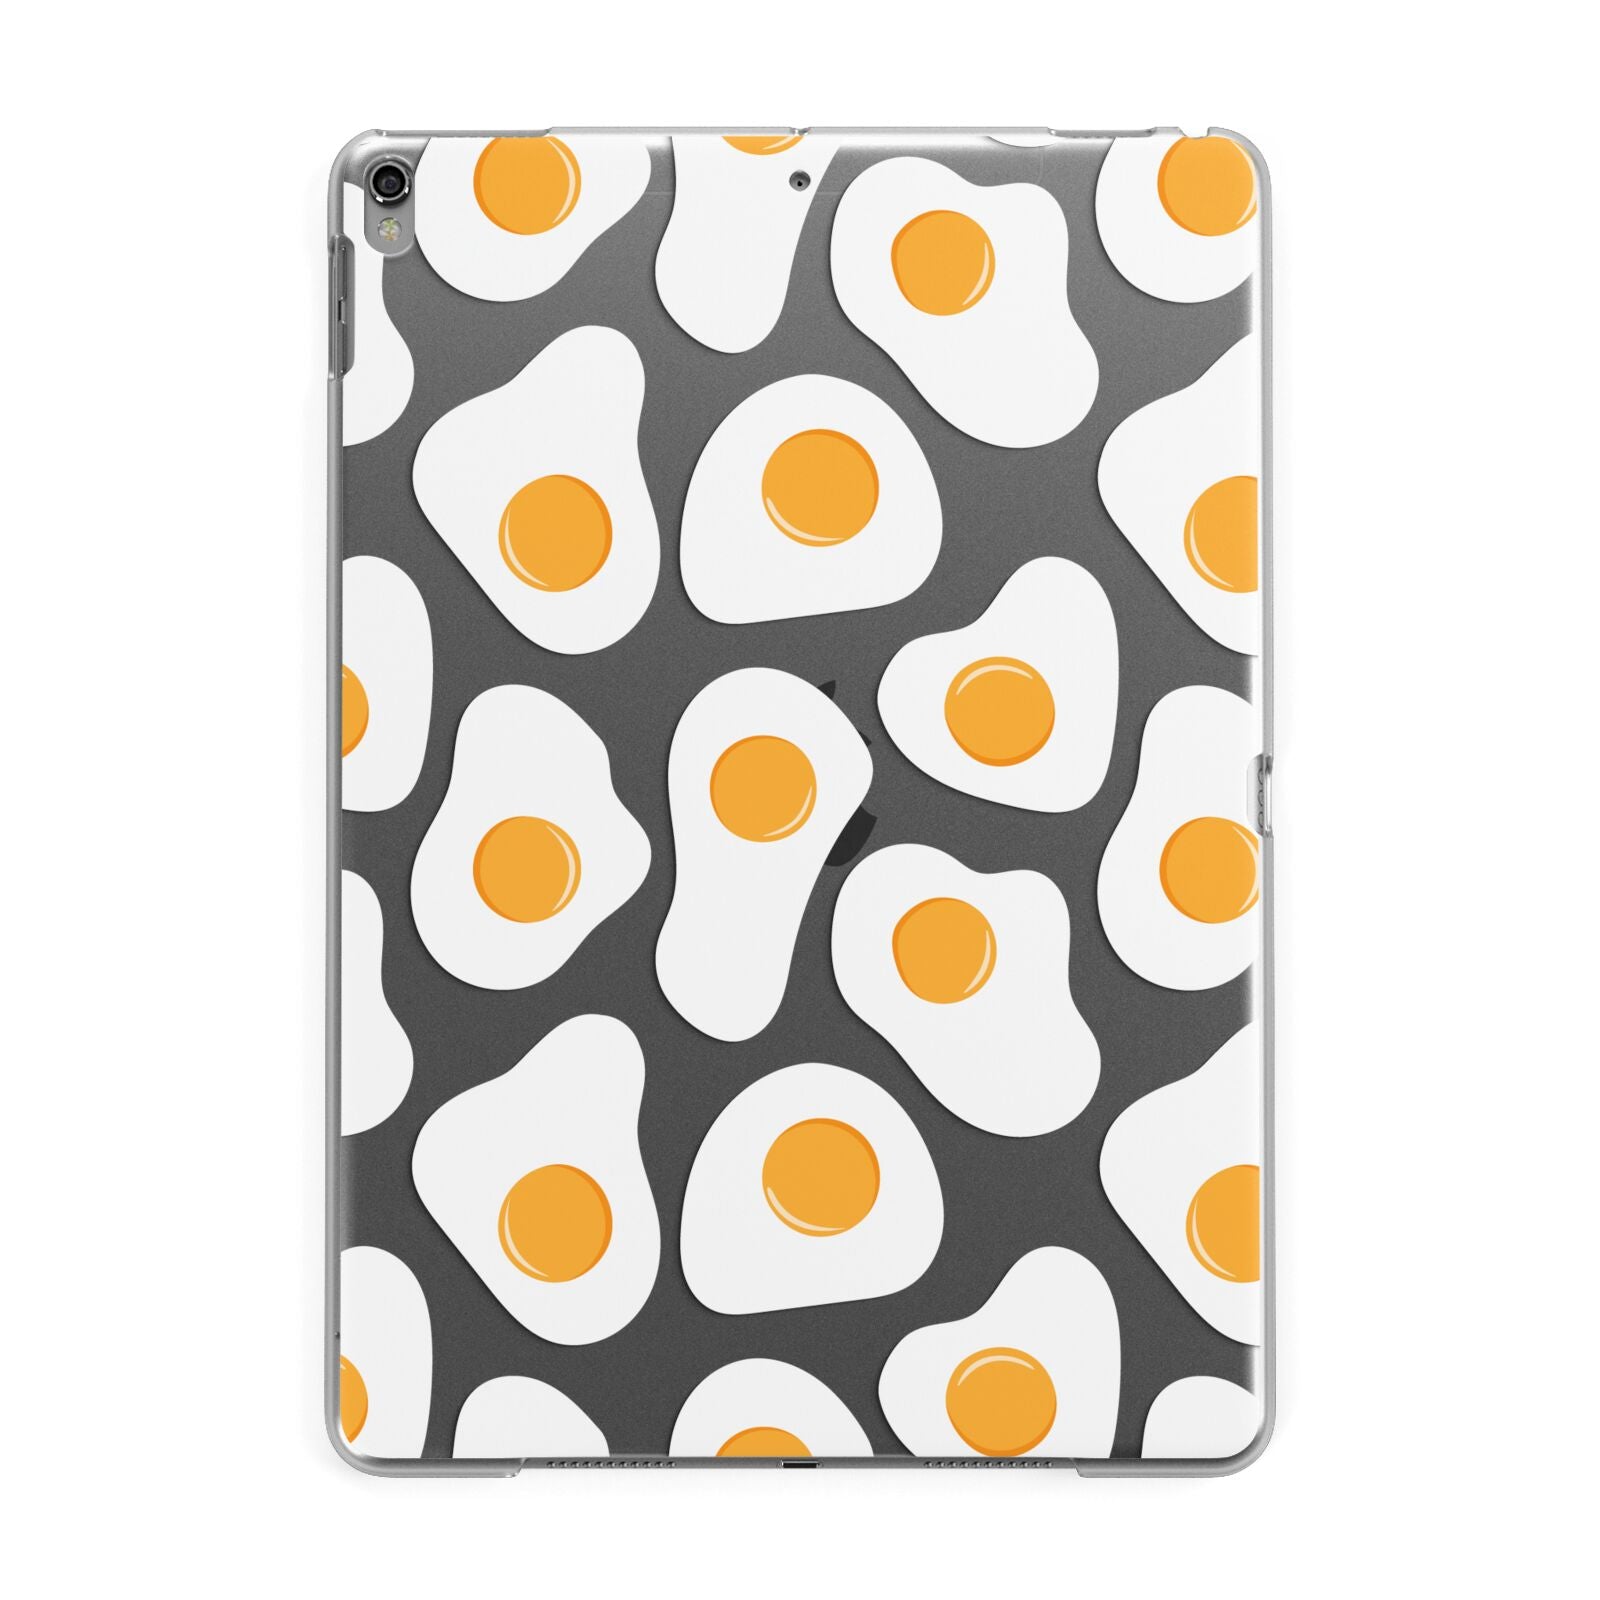 Fried Egg Apple iPad Grey Case